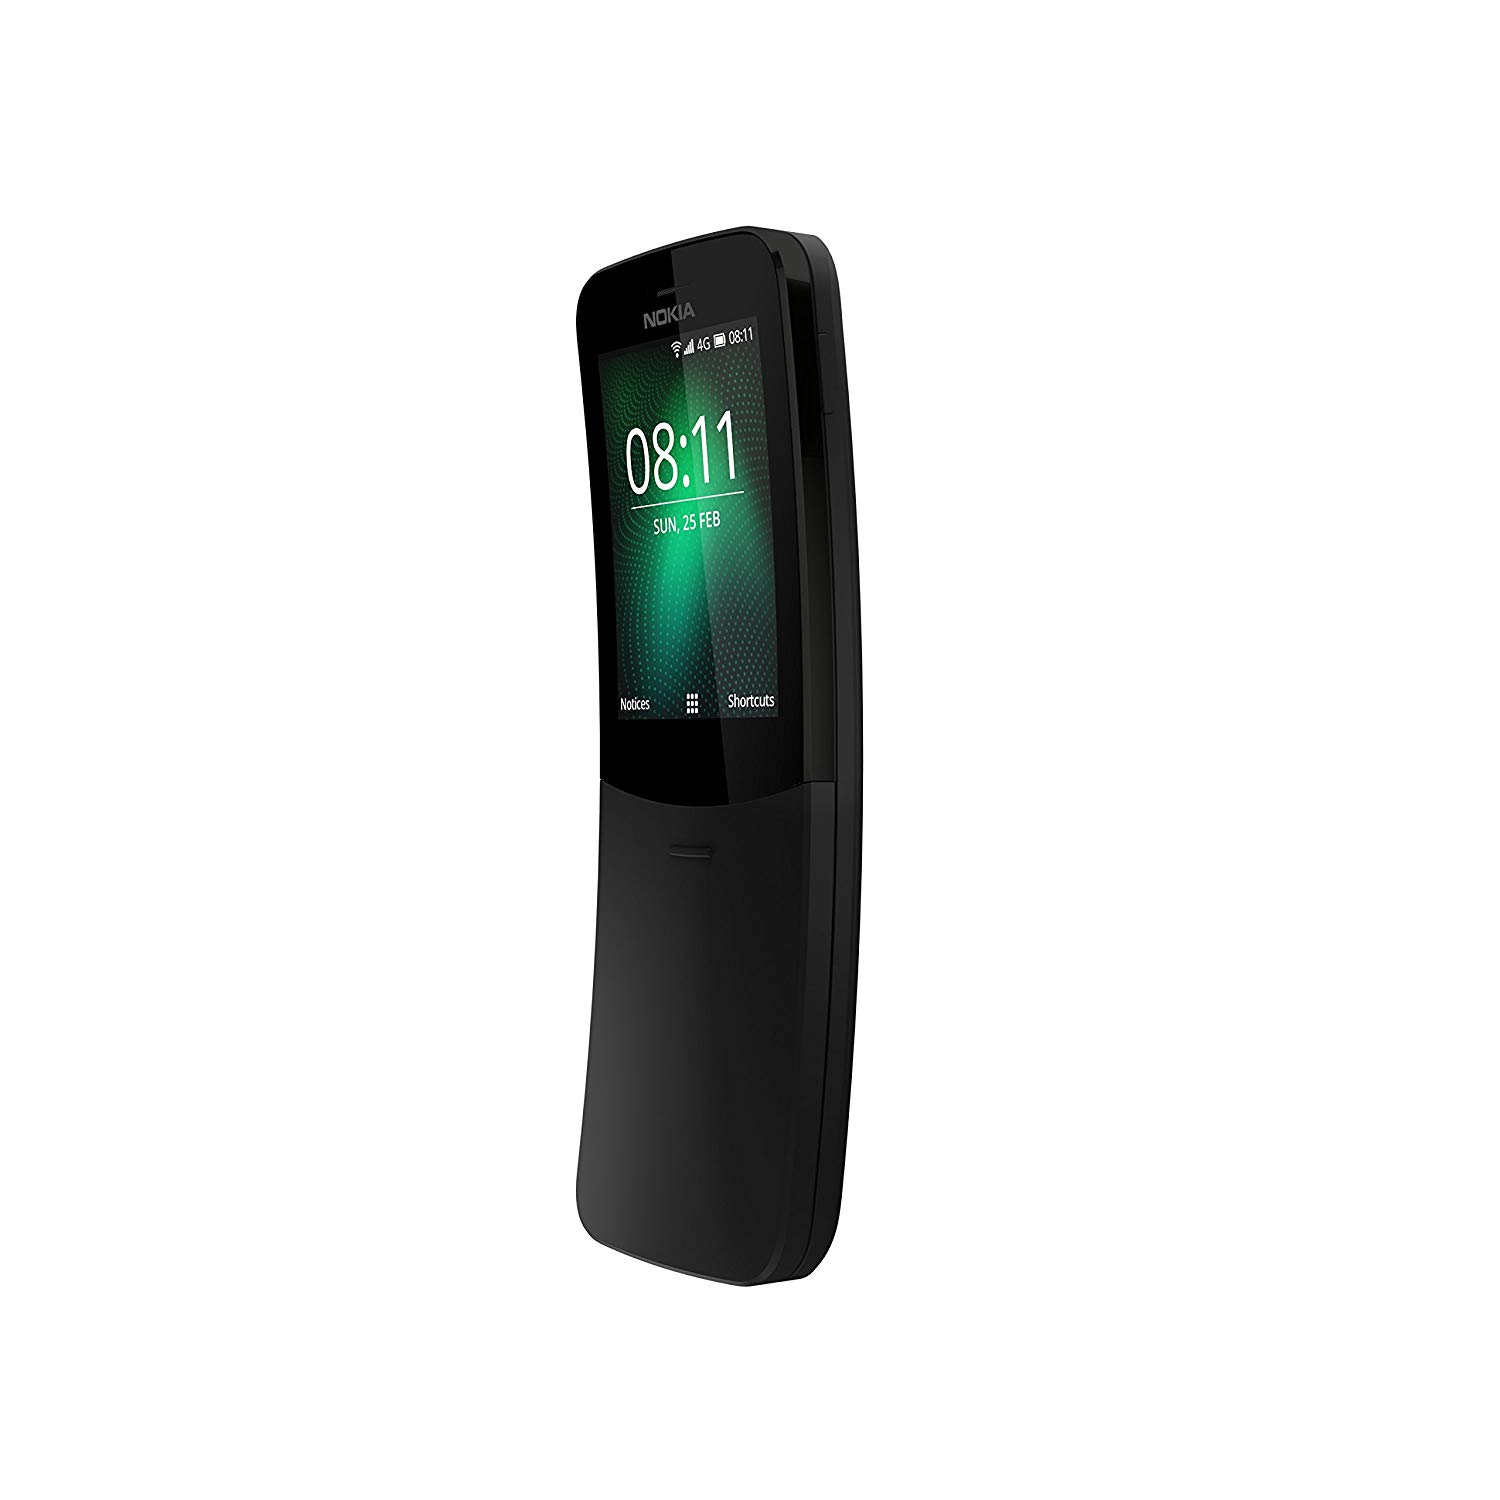 Nokia 8110 4G Slide Phone